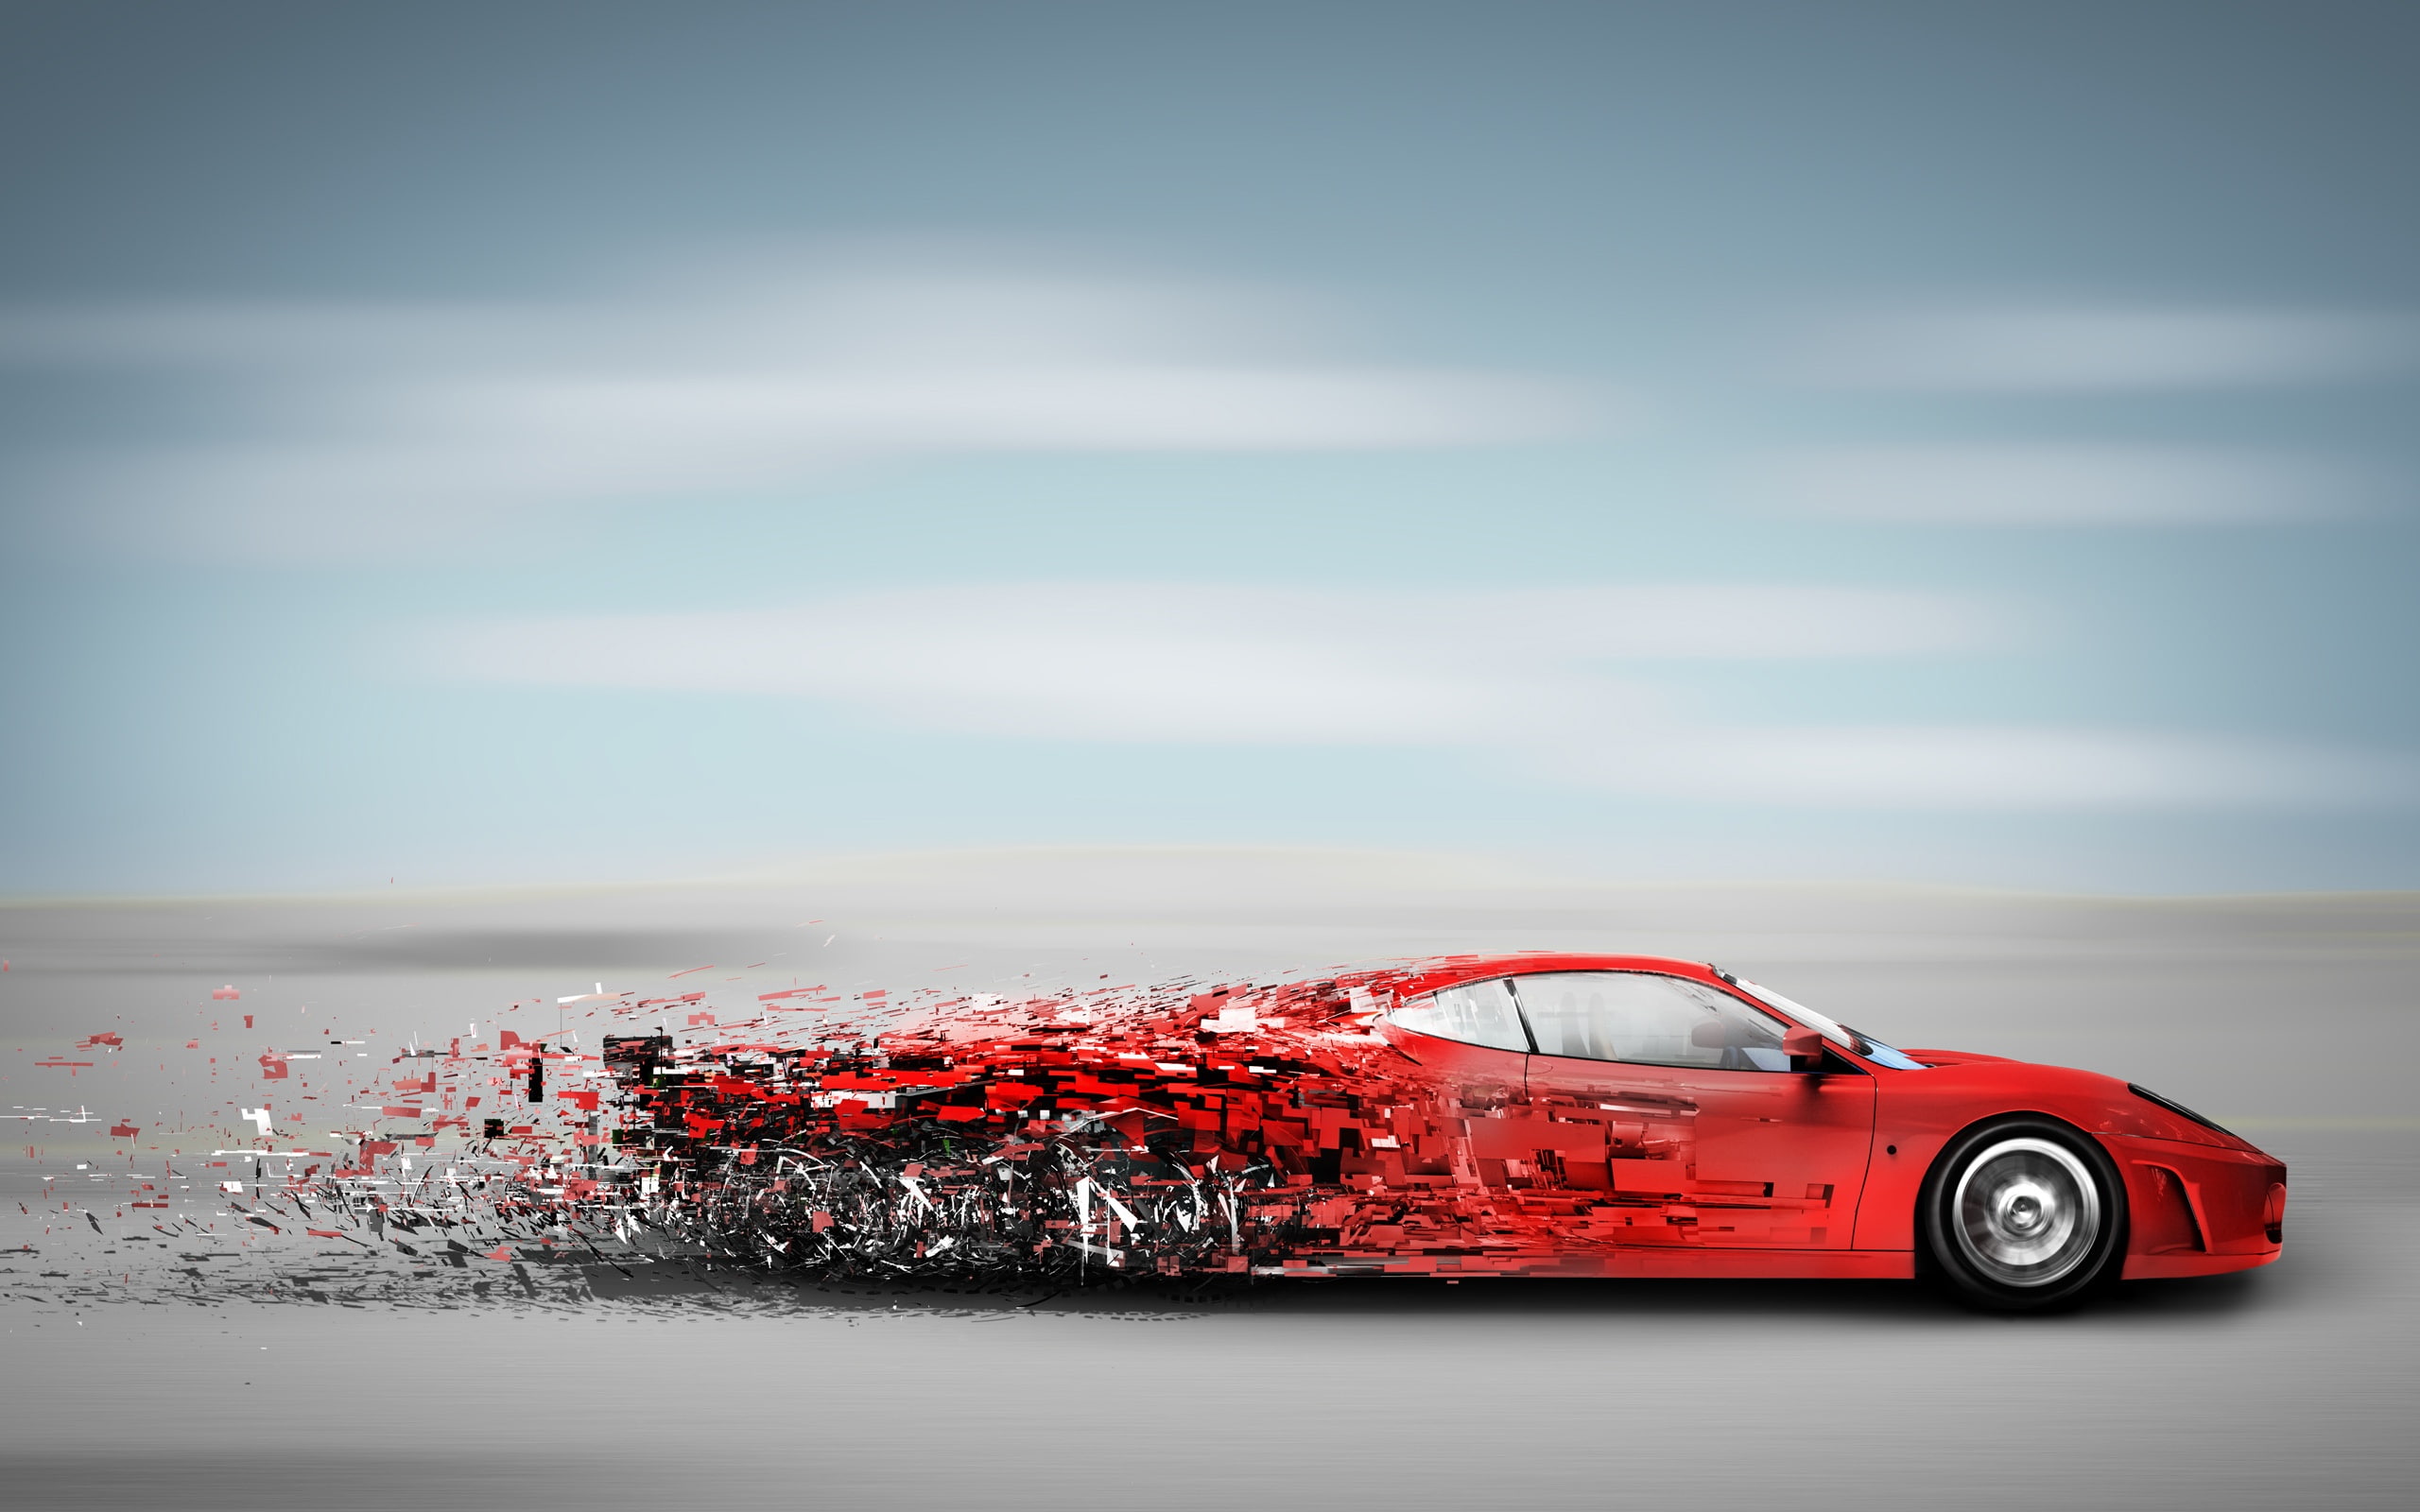 Red sports car in high-speed running, debris creative